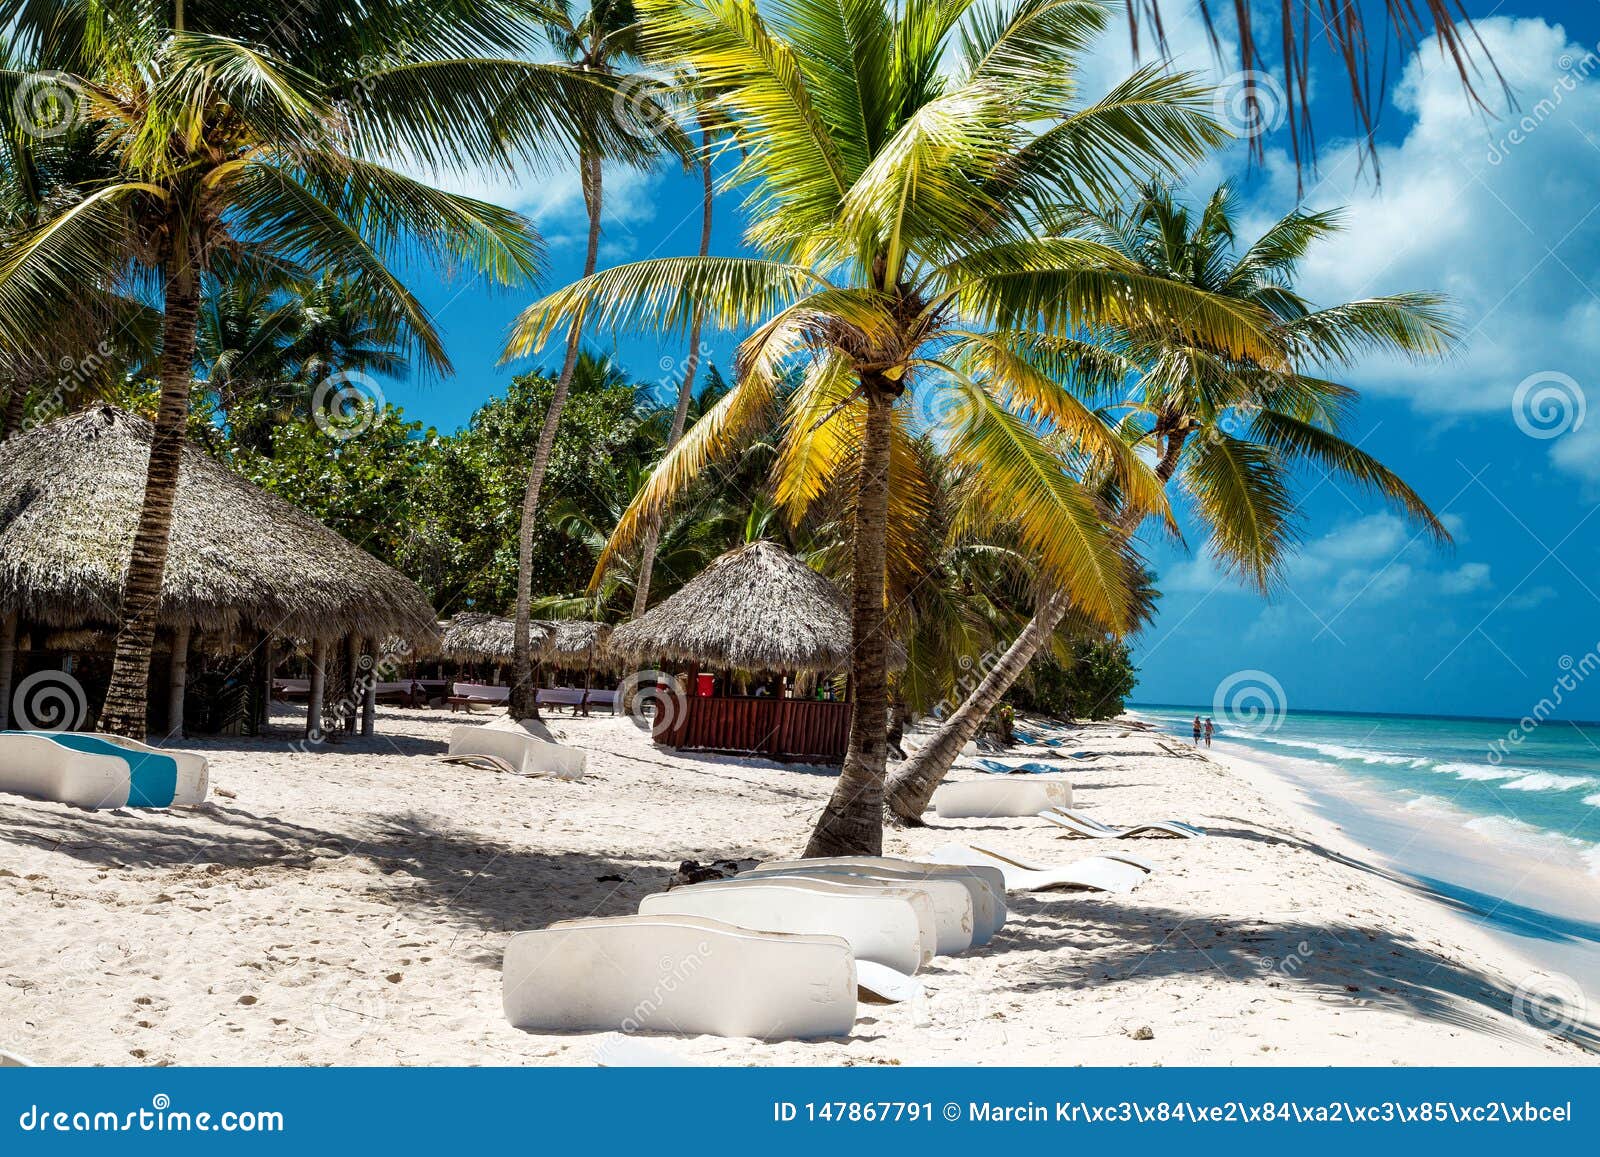 dominican republic, punta cana, saona island - mano juan beach.